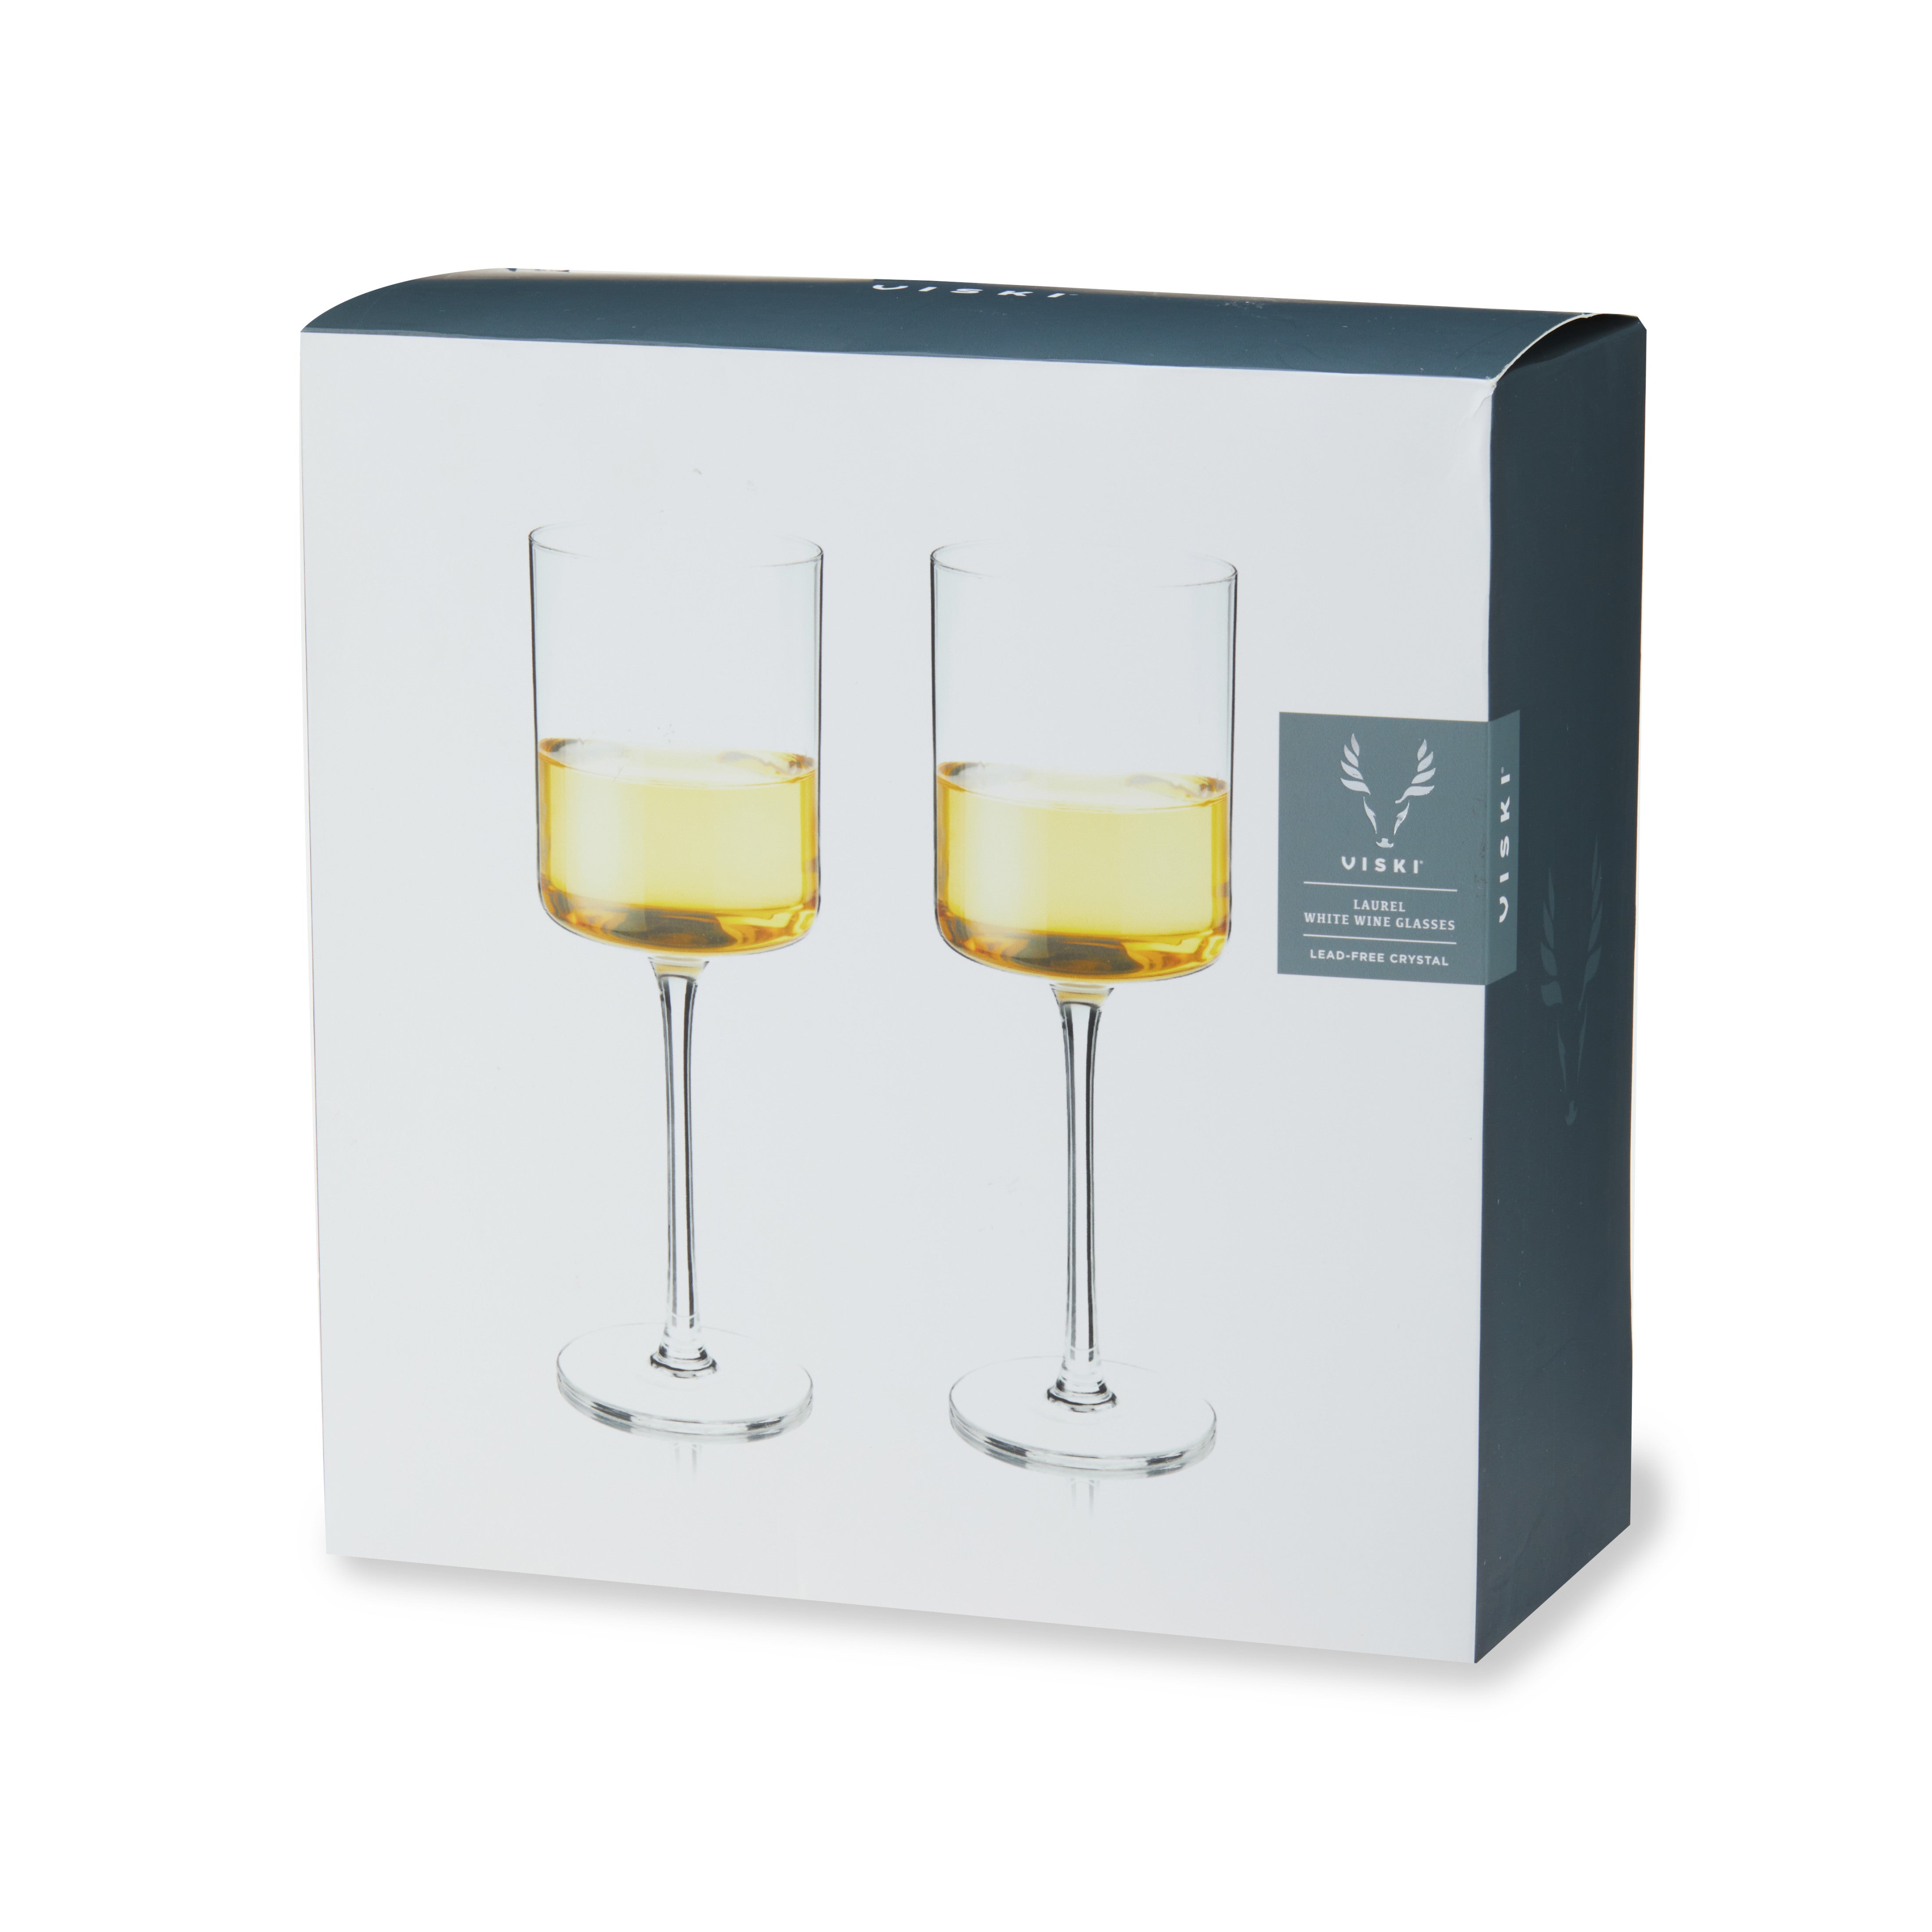 White Wine Crystal Glasses - Set of 2